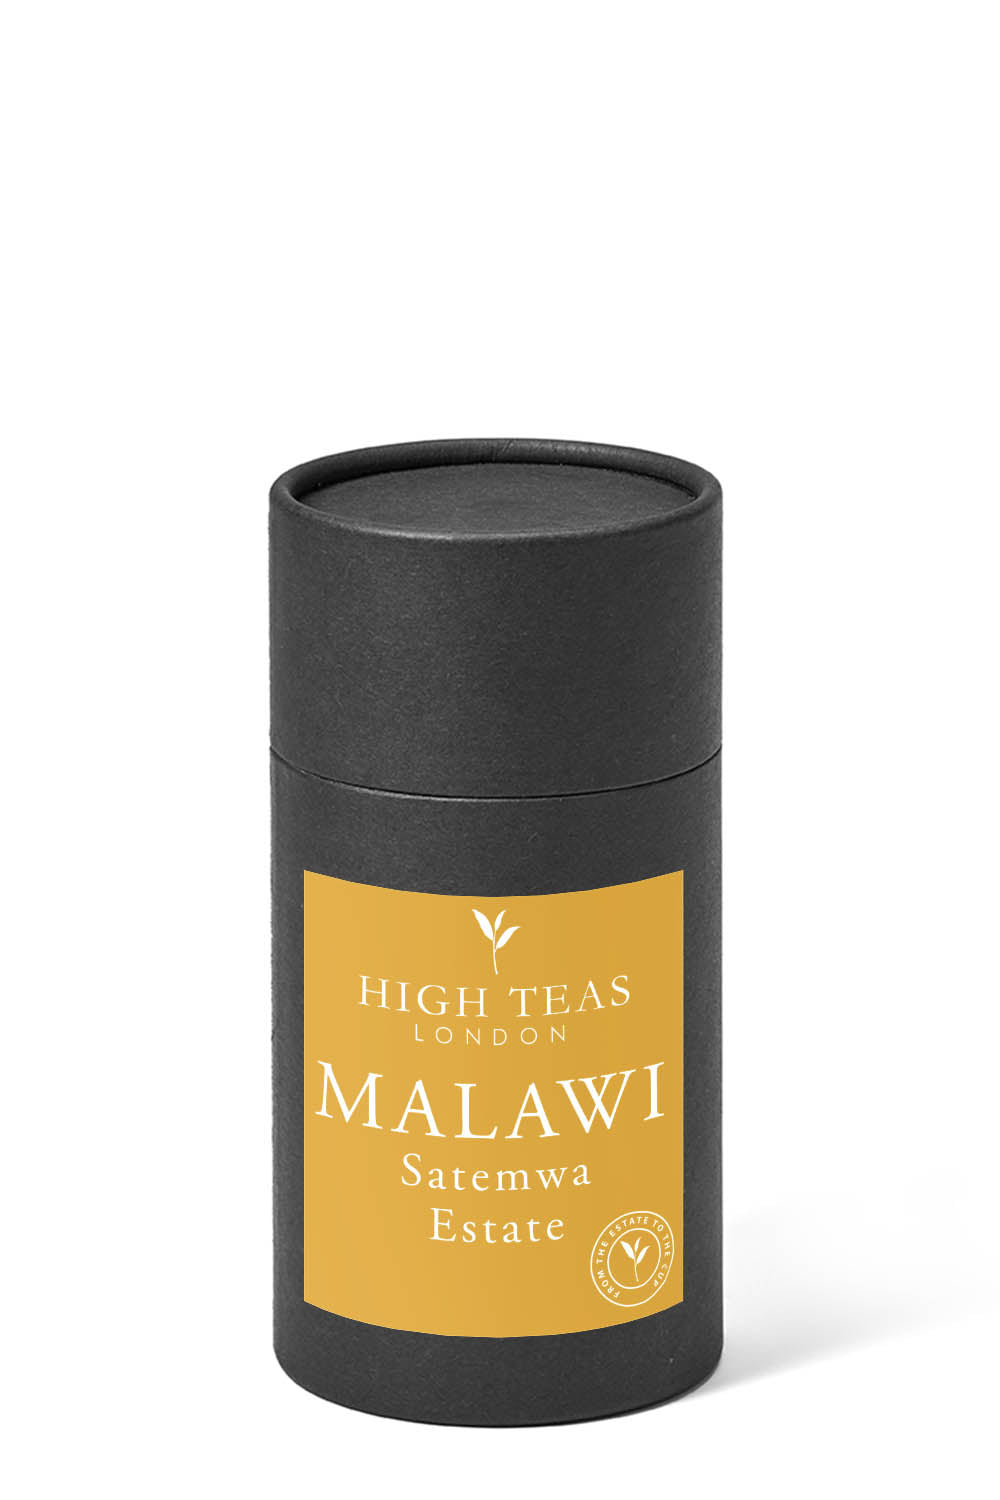 Malawi Satemwa Estate-60g gift-Loose Leaf Tea-High Teas